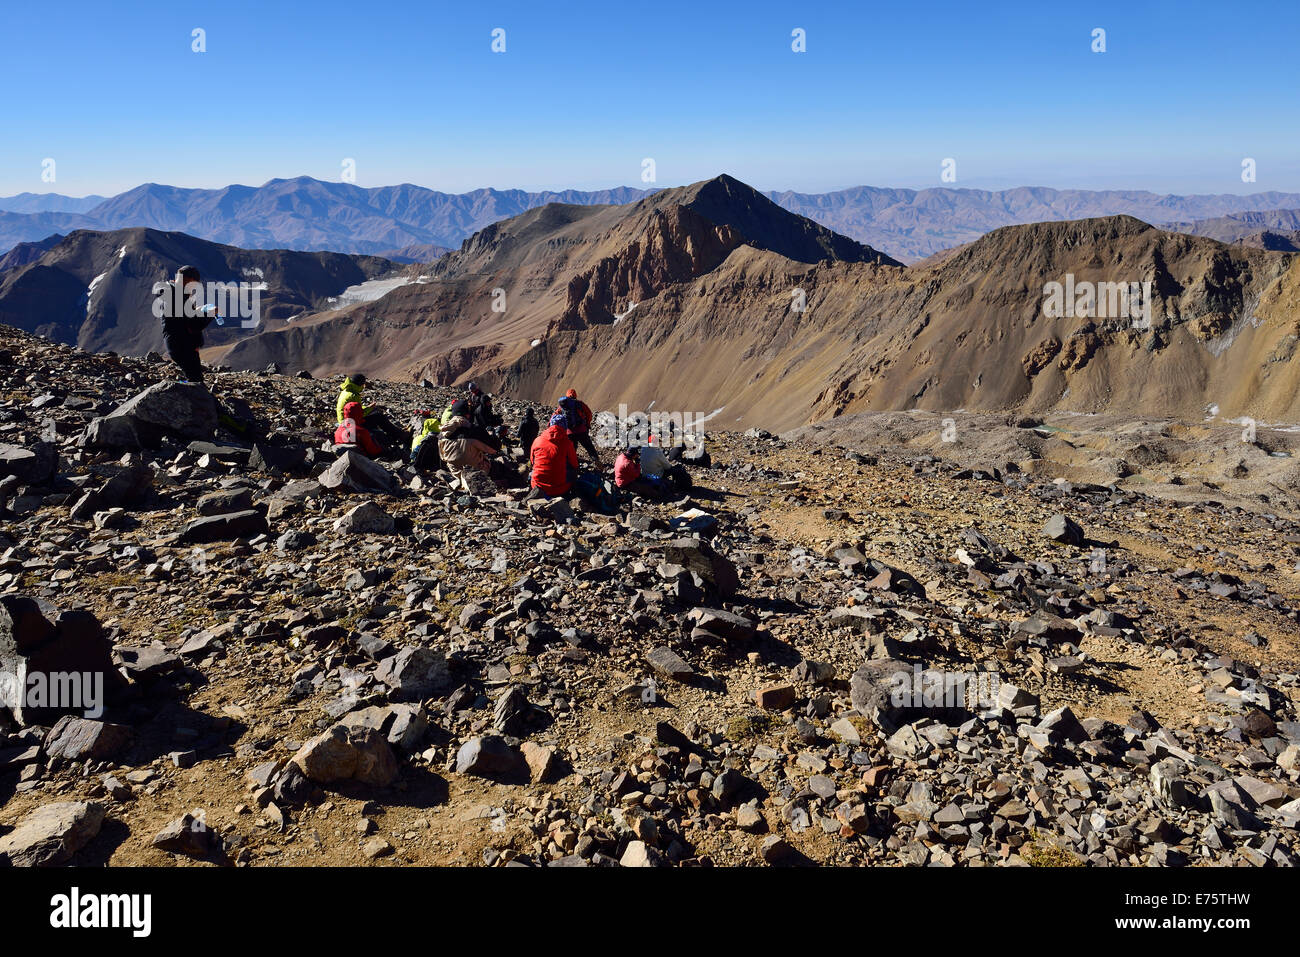 Group of hikers resting on the way to Alam Kuh, 4848m, Kelardasht, Takht-e Suleyman Massif, Alborz Mountains Stock Photo